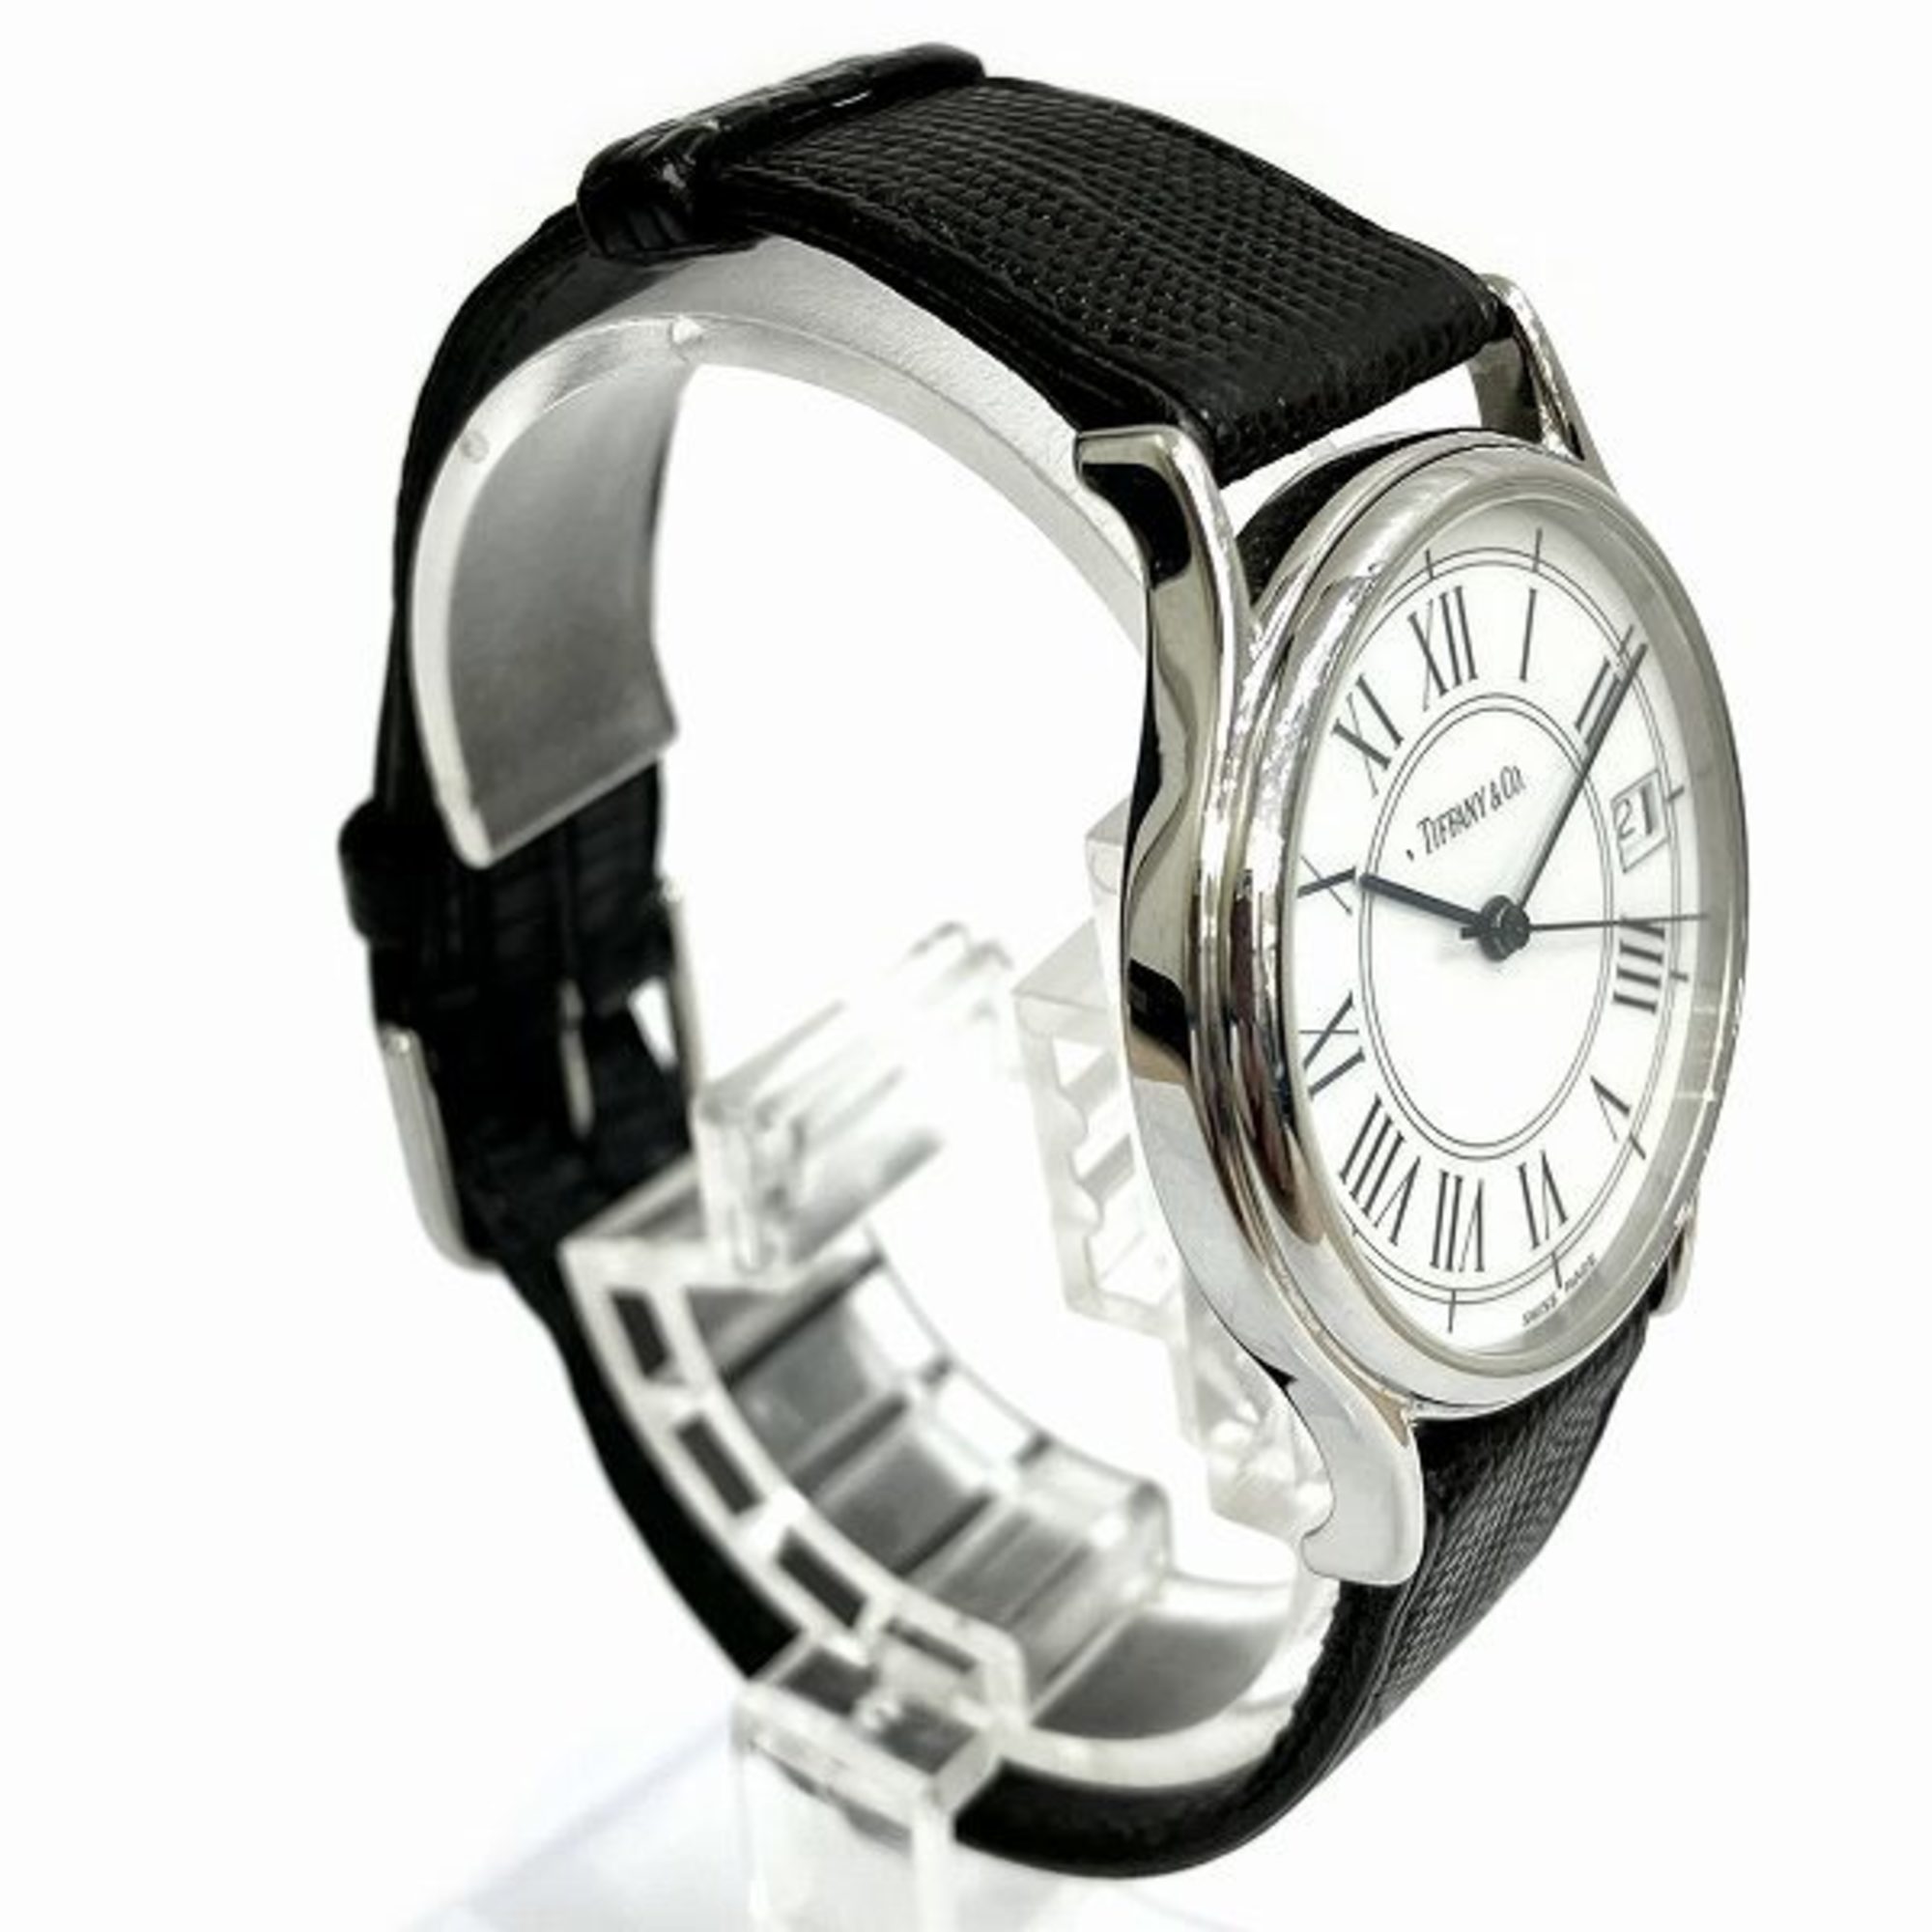 Tiffany Classic Round Quartz White Dial Watch Men's